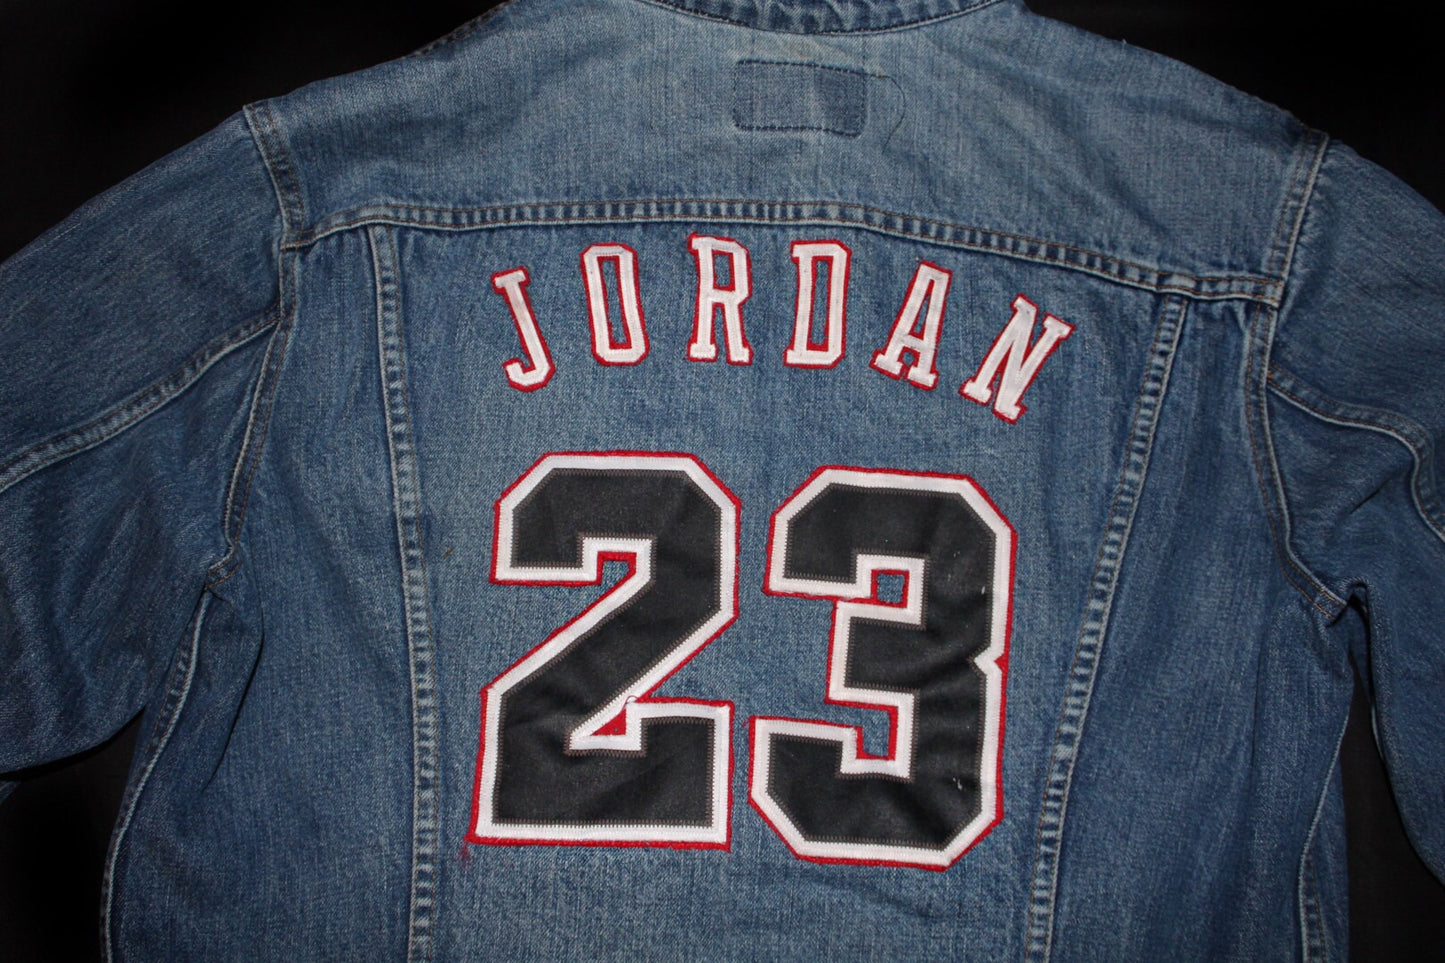 Chi town MJ denim jacket